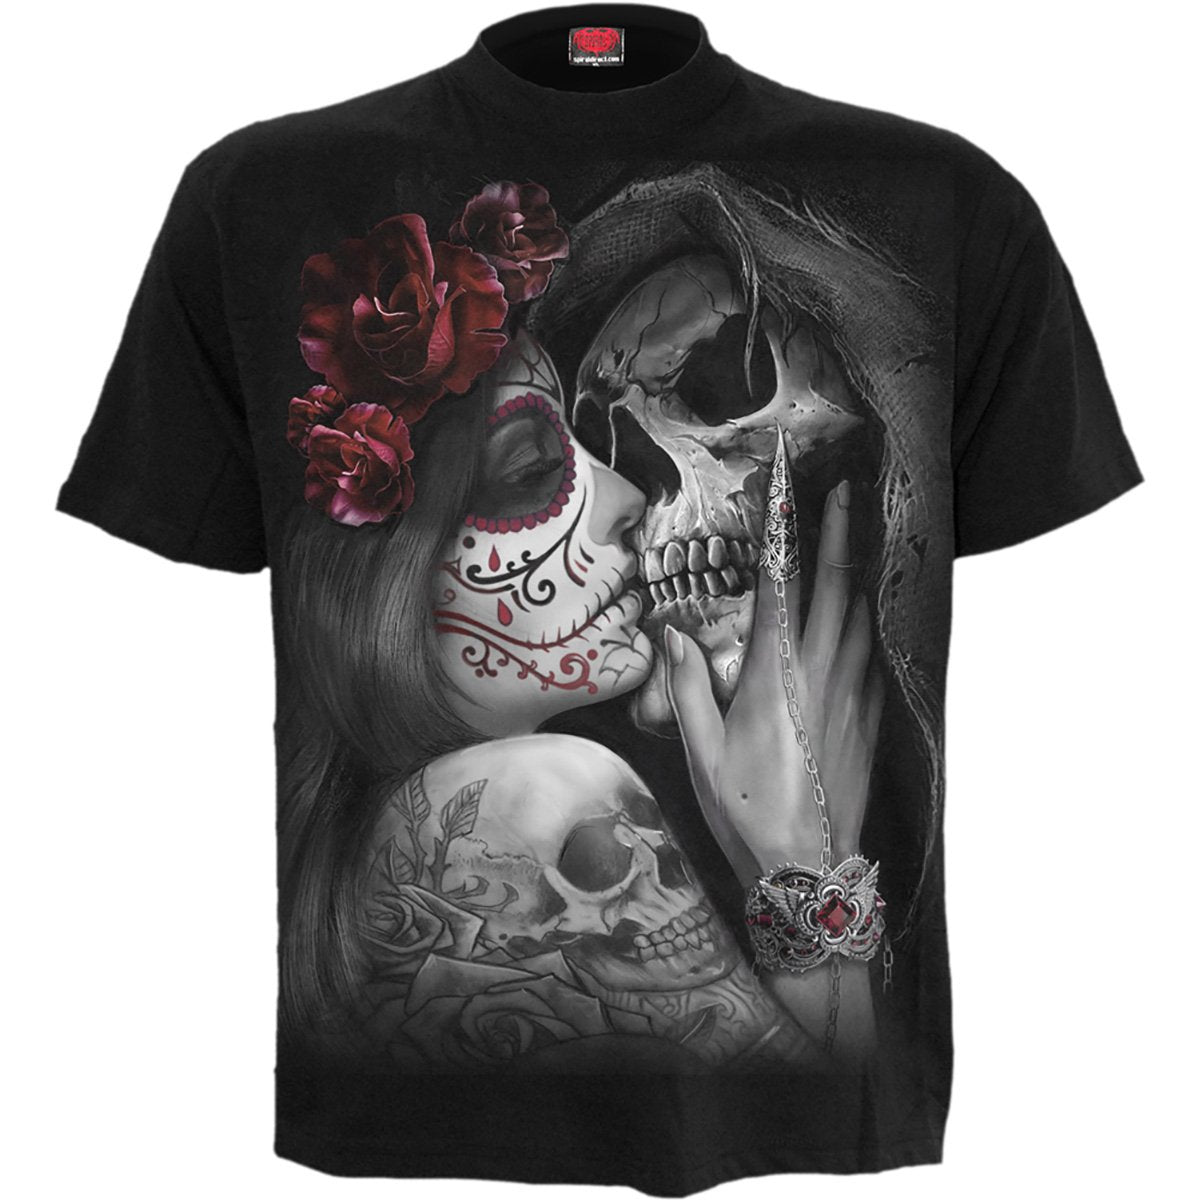 DEAD KISS - T-Shirt Black - Spiral USA